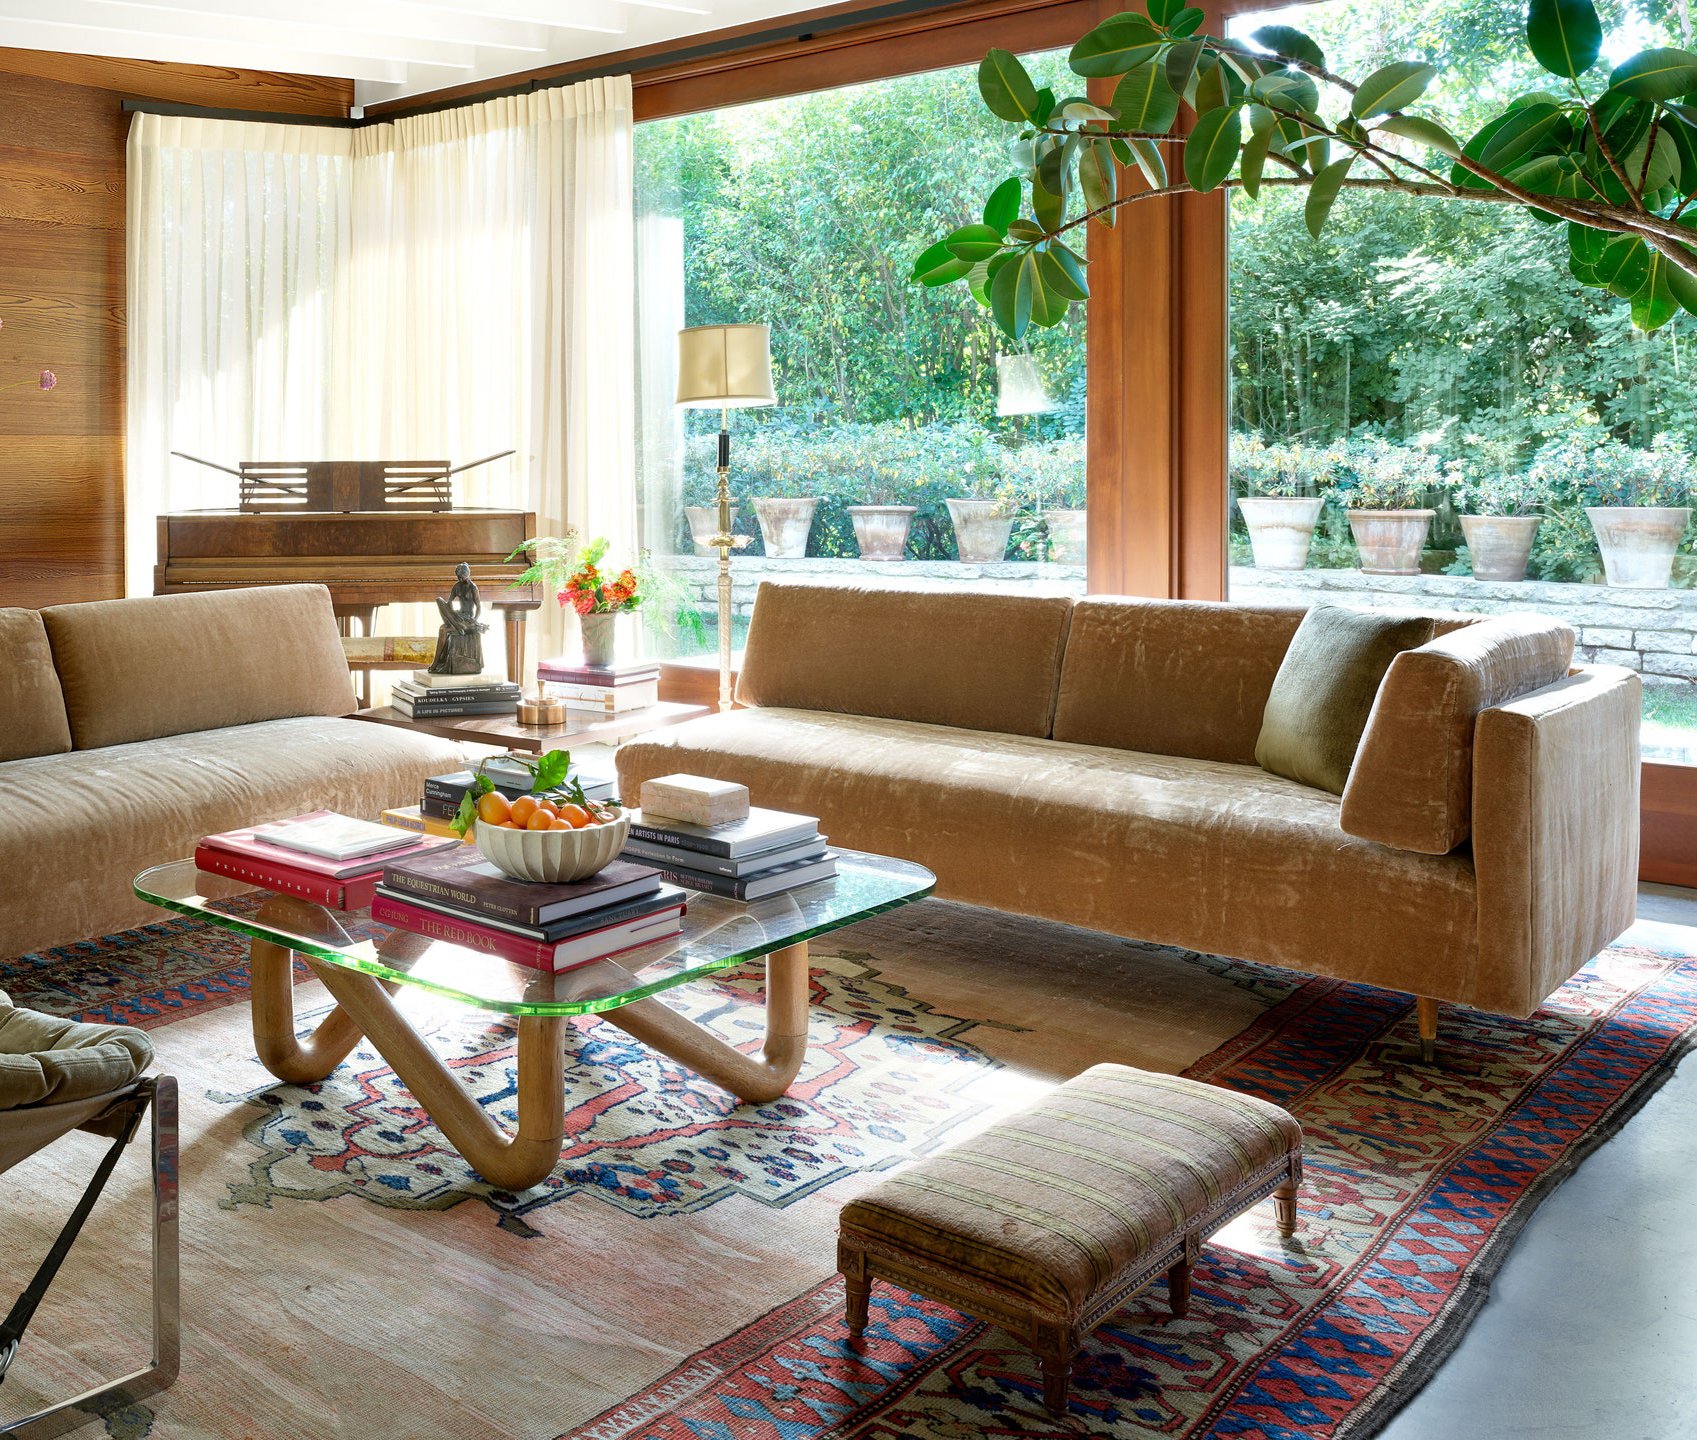 Inside Dakota Johnson's home | Source: YouTube/ Architectural Digest